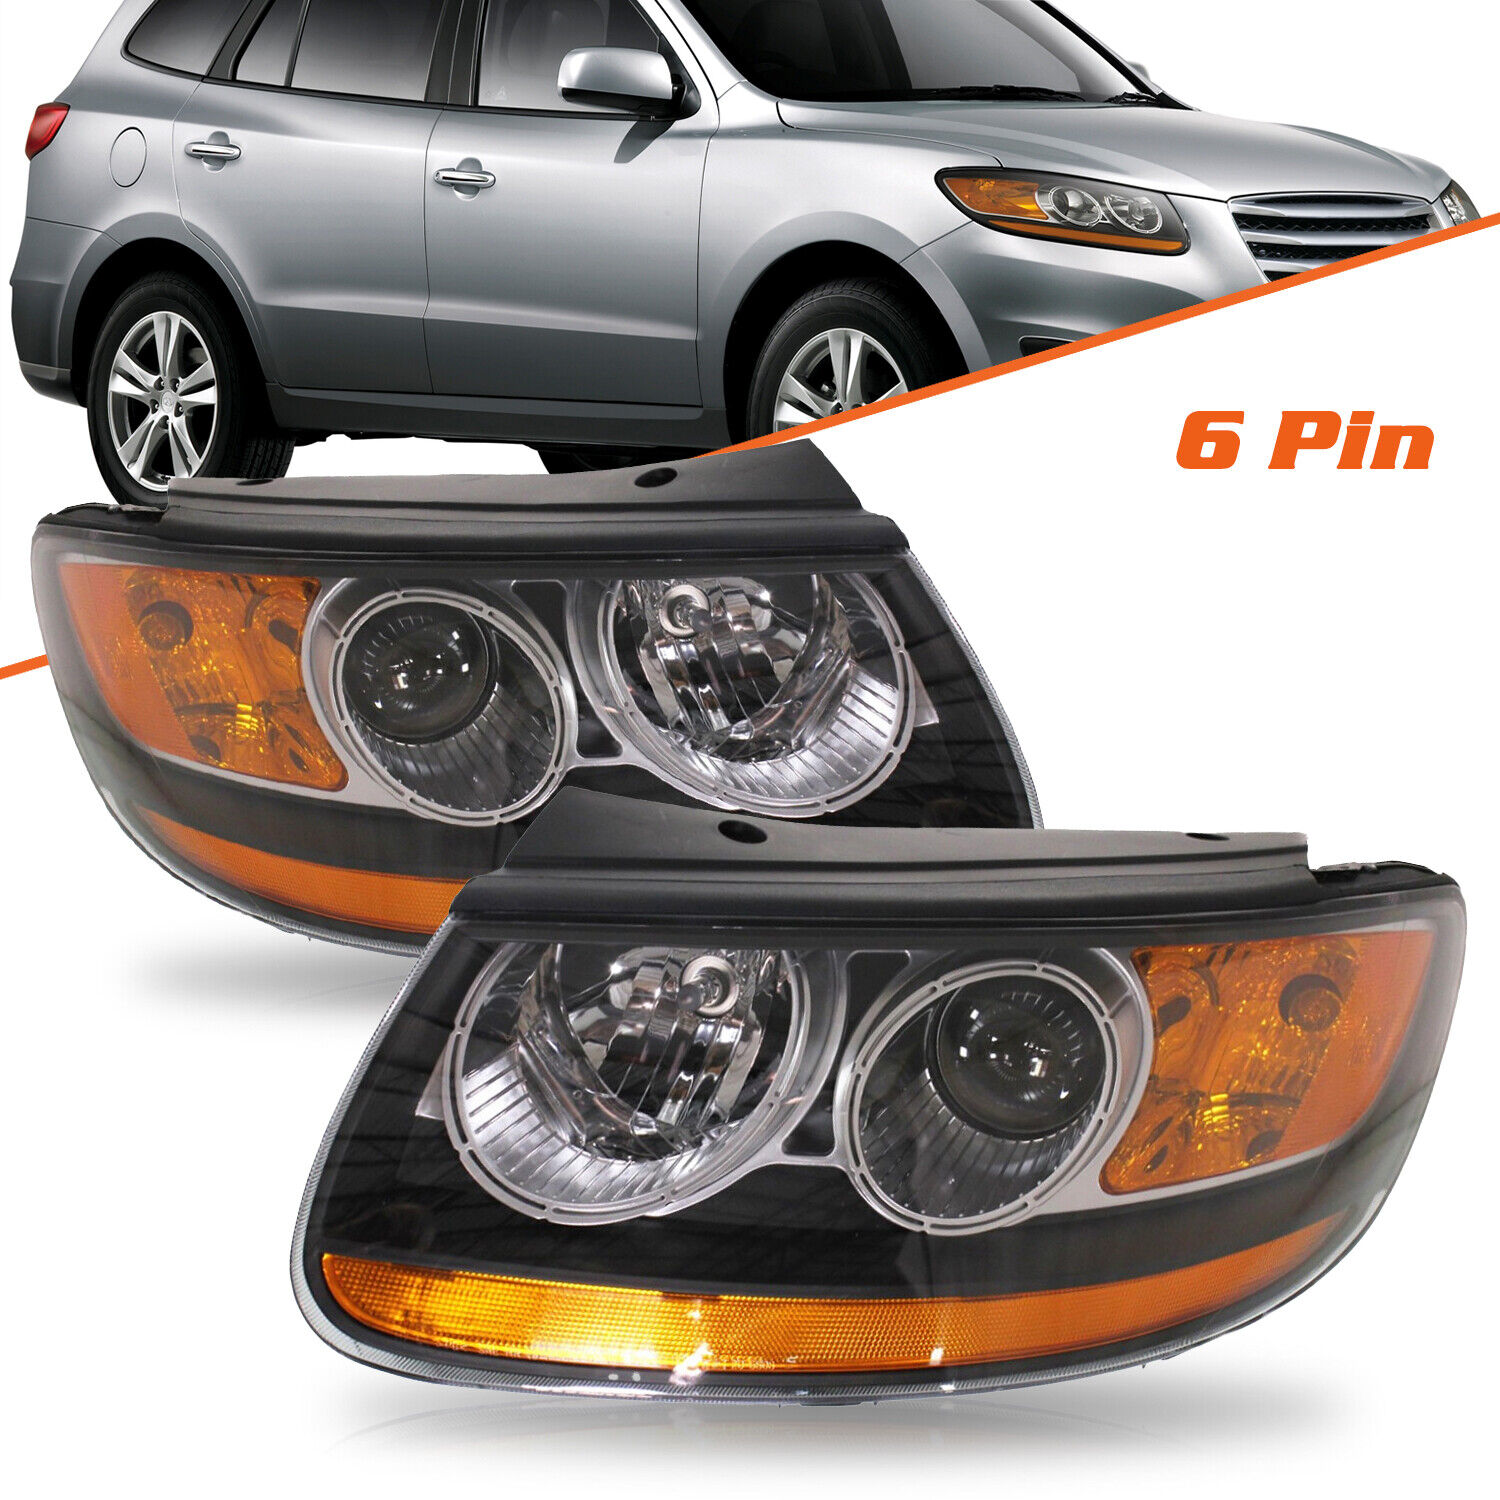 For 2007-2012 Hyundai Santa Fe Halogen 6pin Headlights Black OEM Headlamps L+R